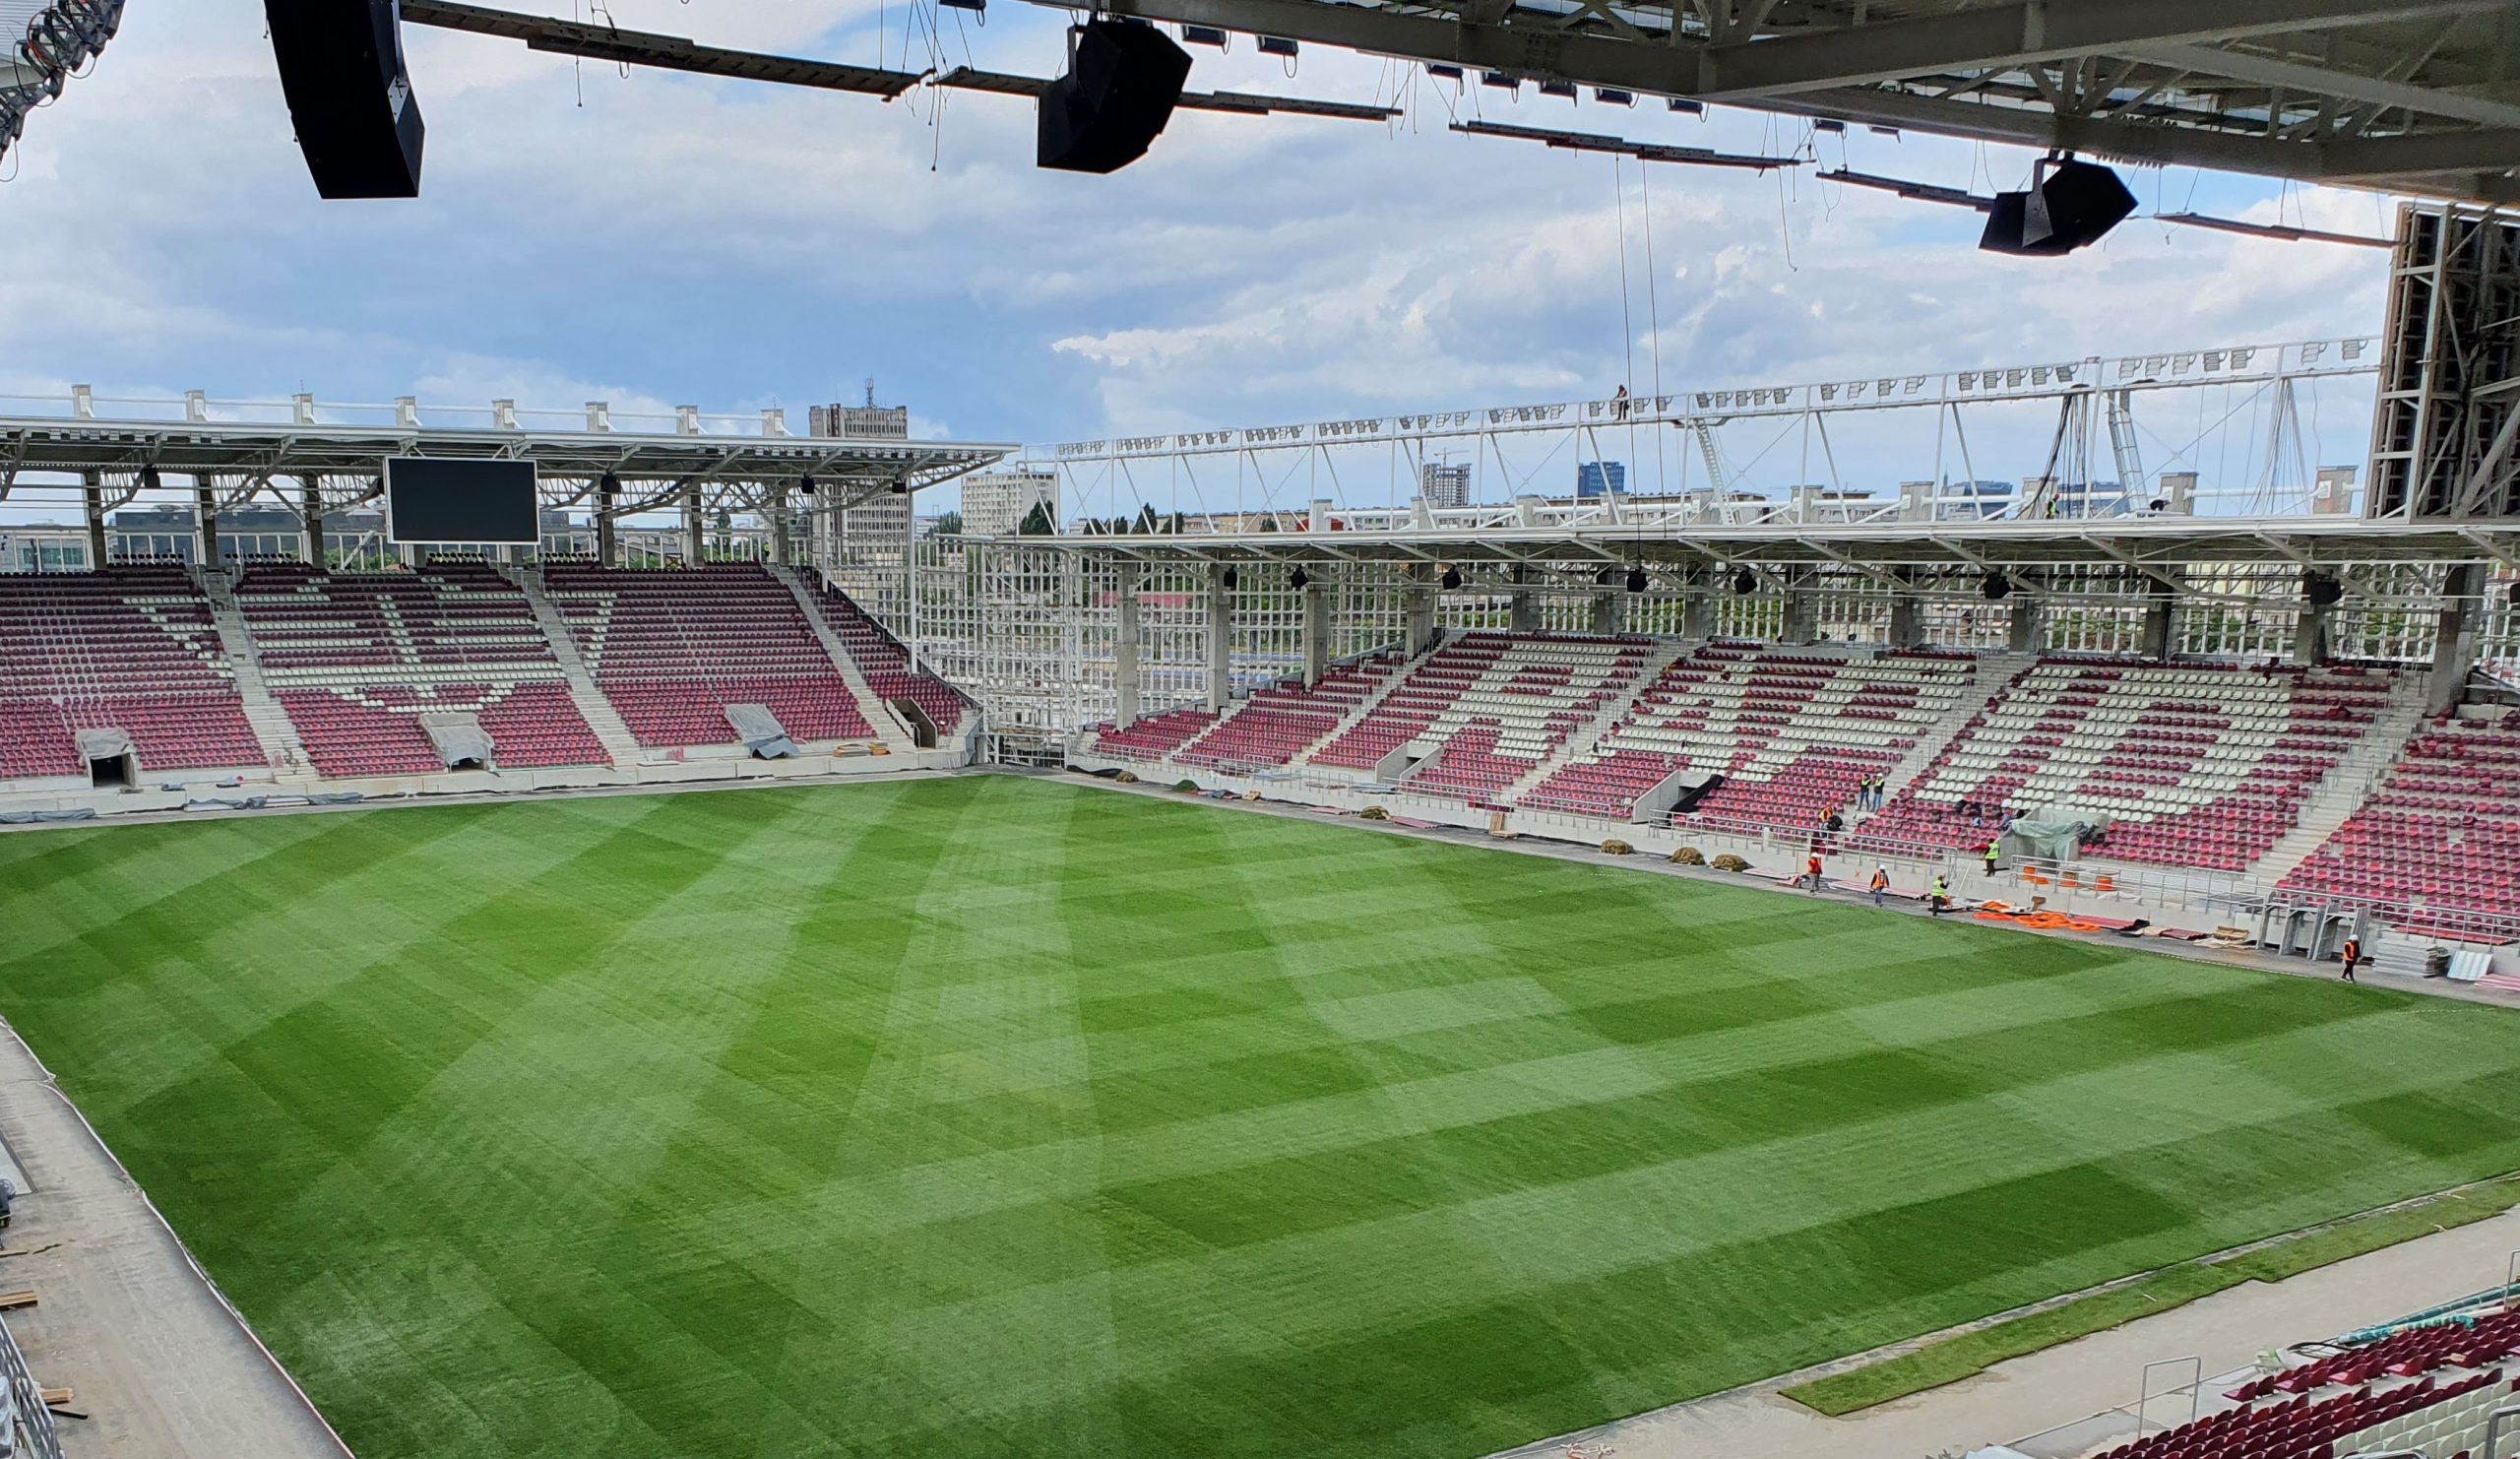 RAPID Stadium – Compliance features